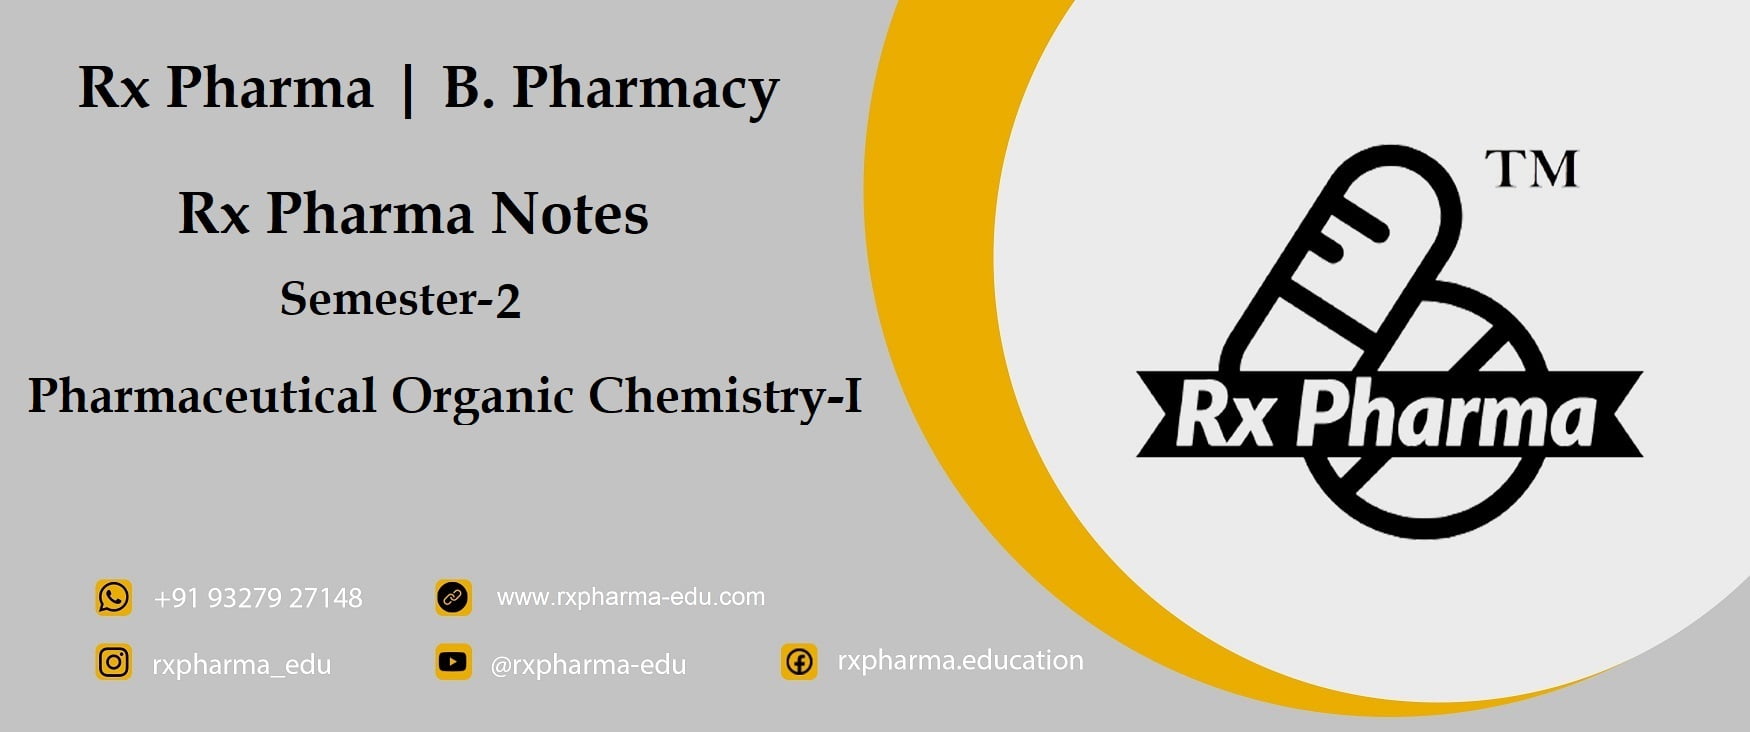 Pharmaceutical Organic Chemistry-1 Notes Banner